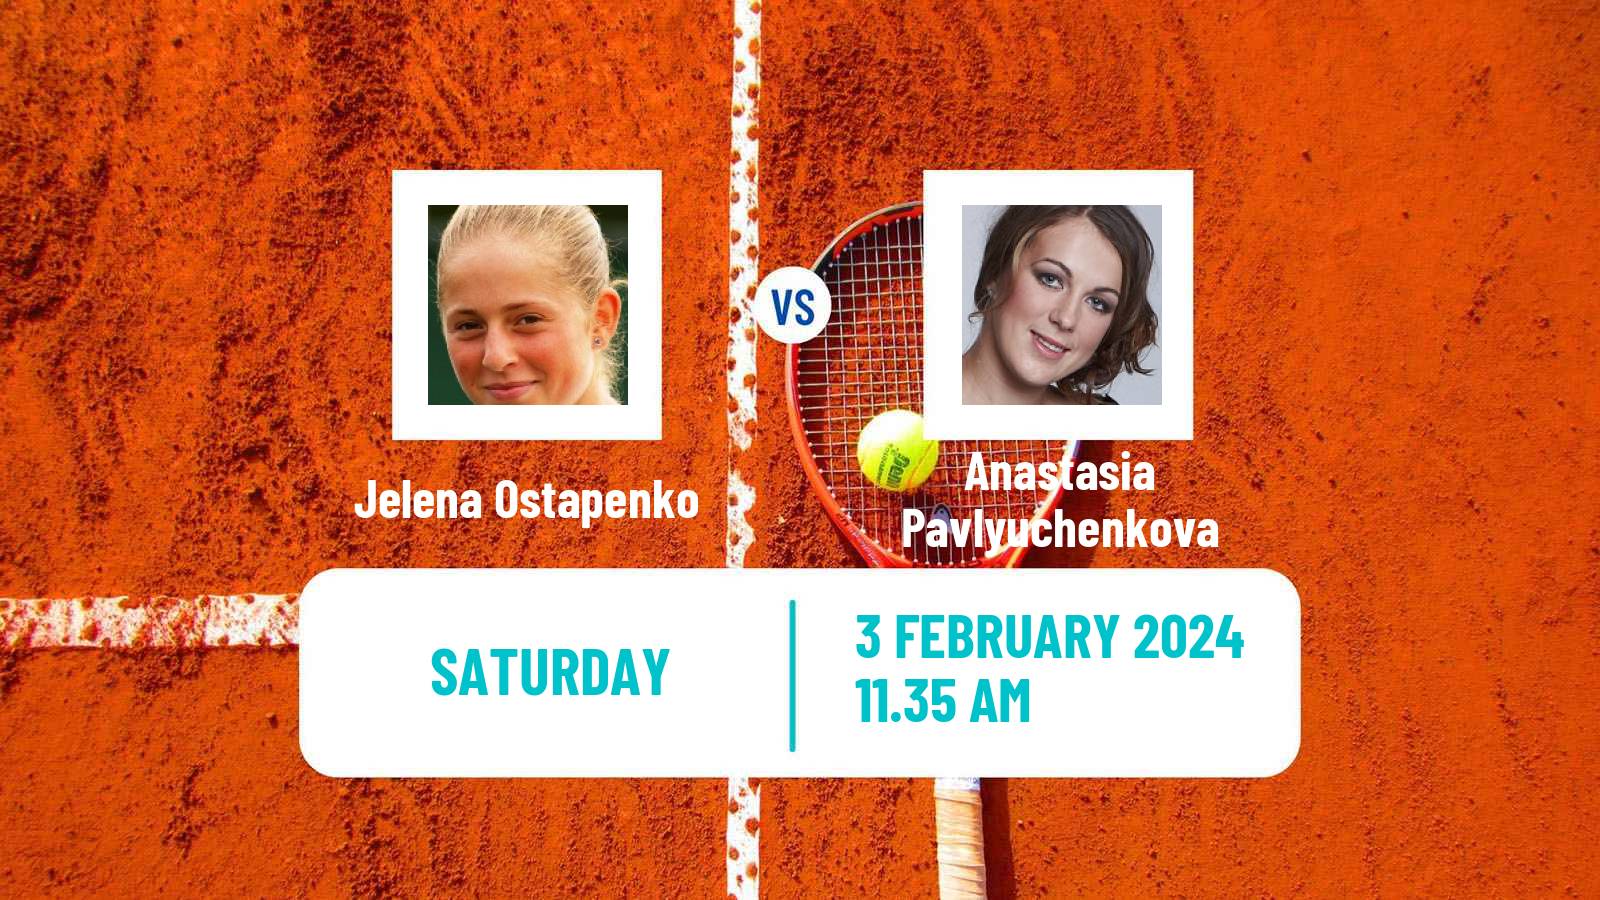 Tennis WTA Linz Jelena Ostapenko - Anastasia Pavlyuchenkova